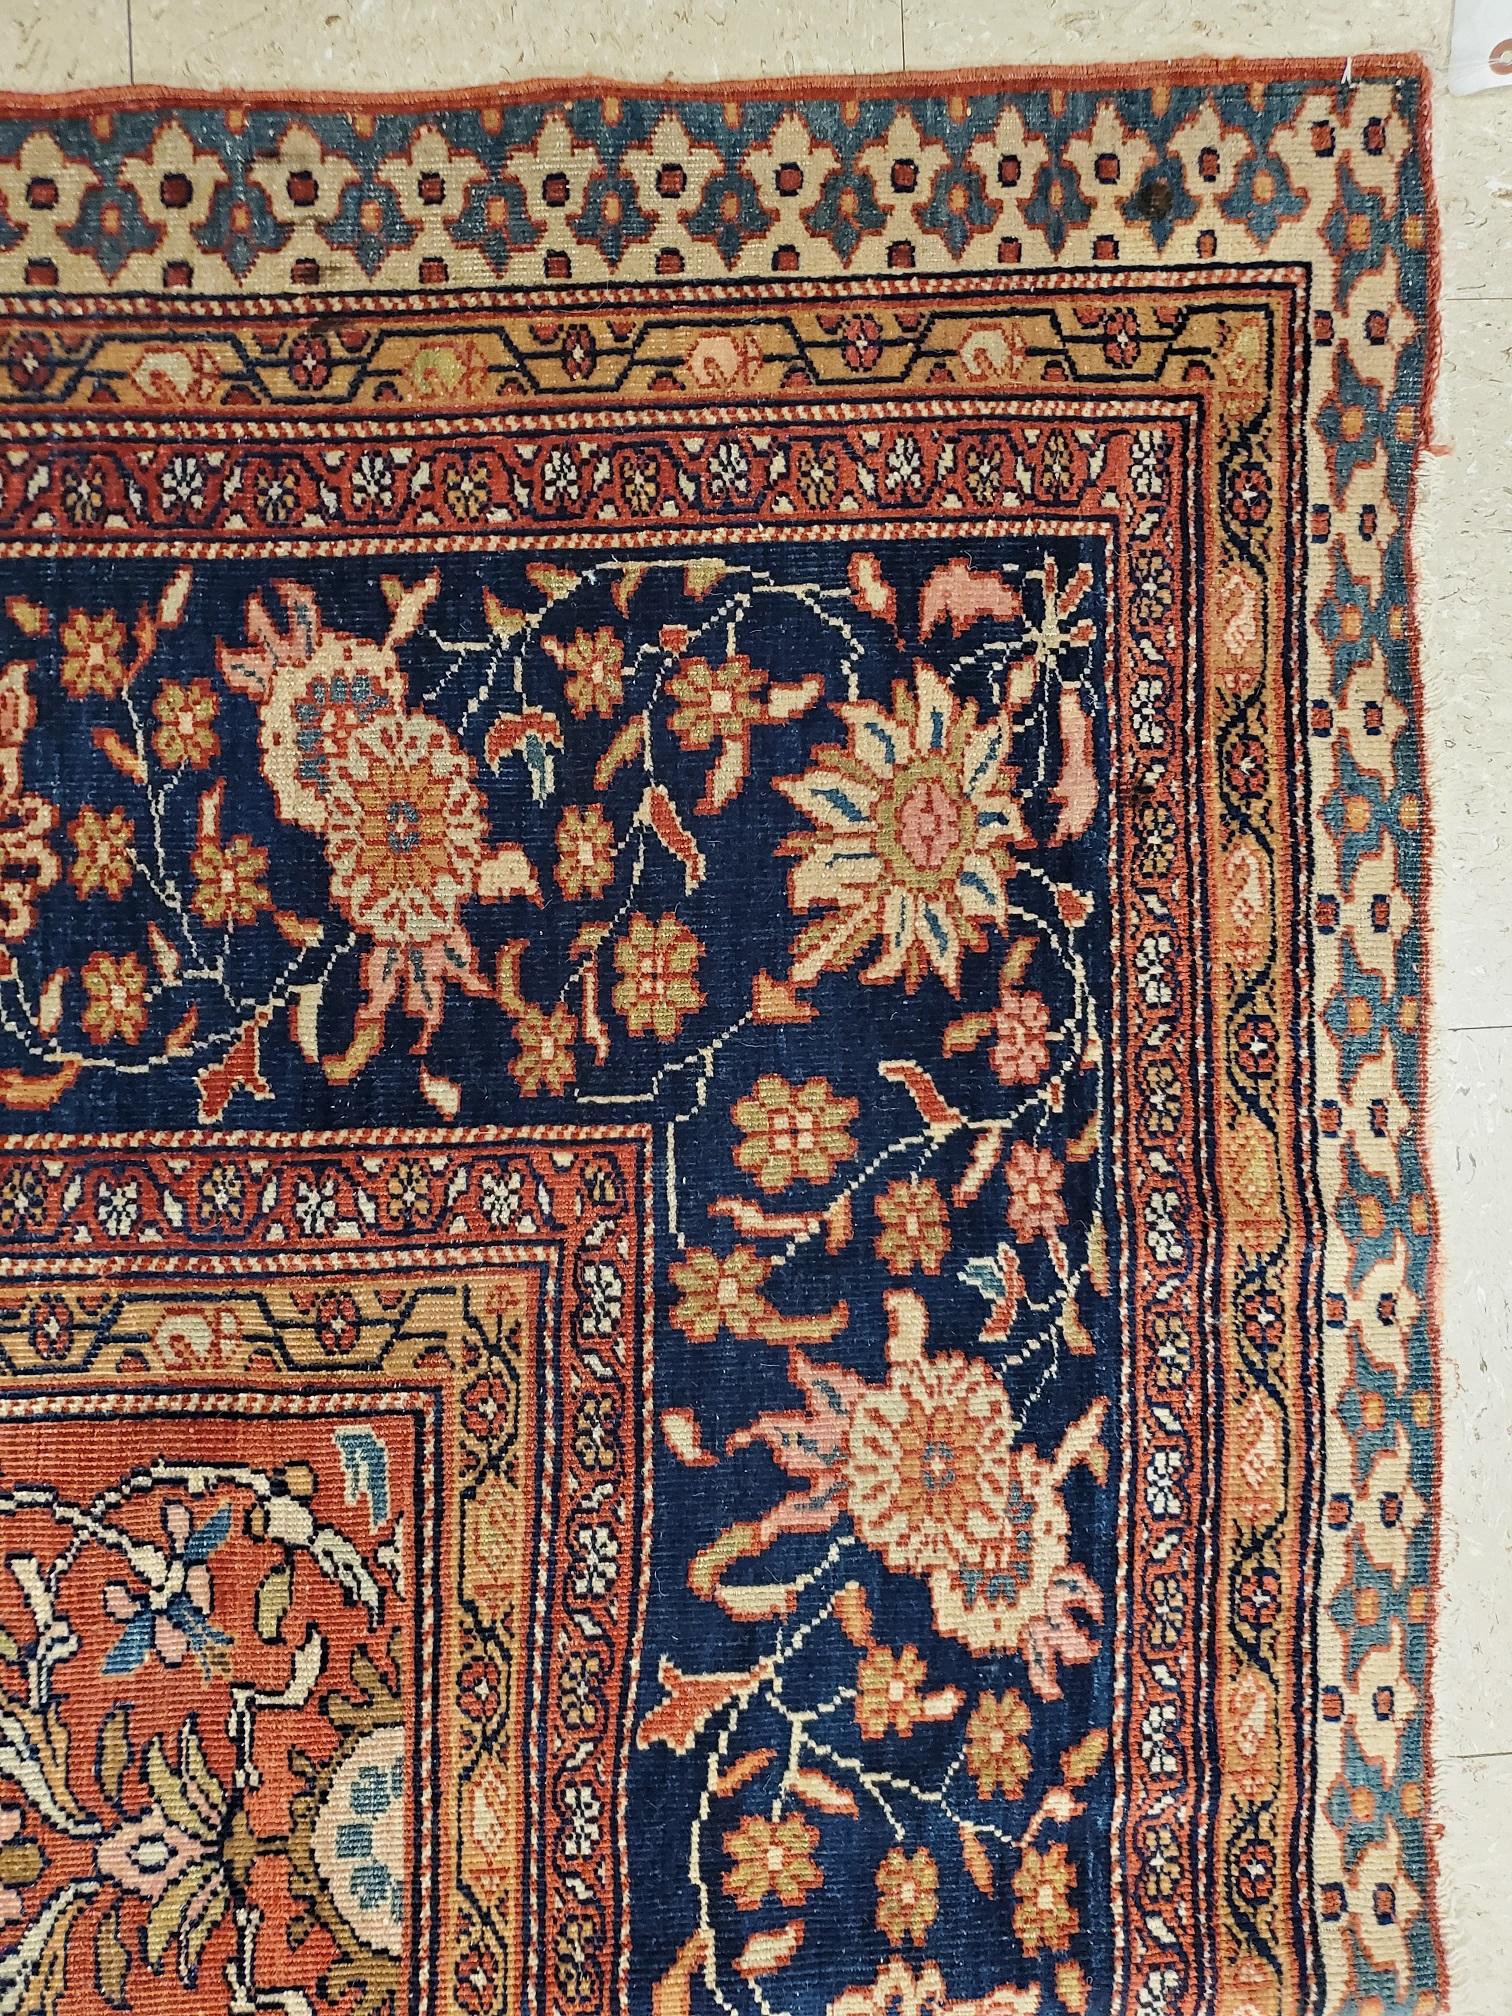 Wool Antique Farahan Sarouk Carpet, Handmade Oriental Rug, Ivory, Red, Navy, Fine  For Sale